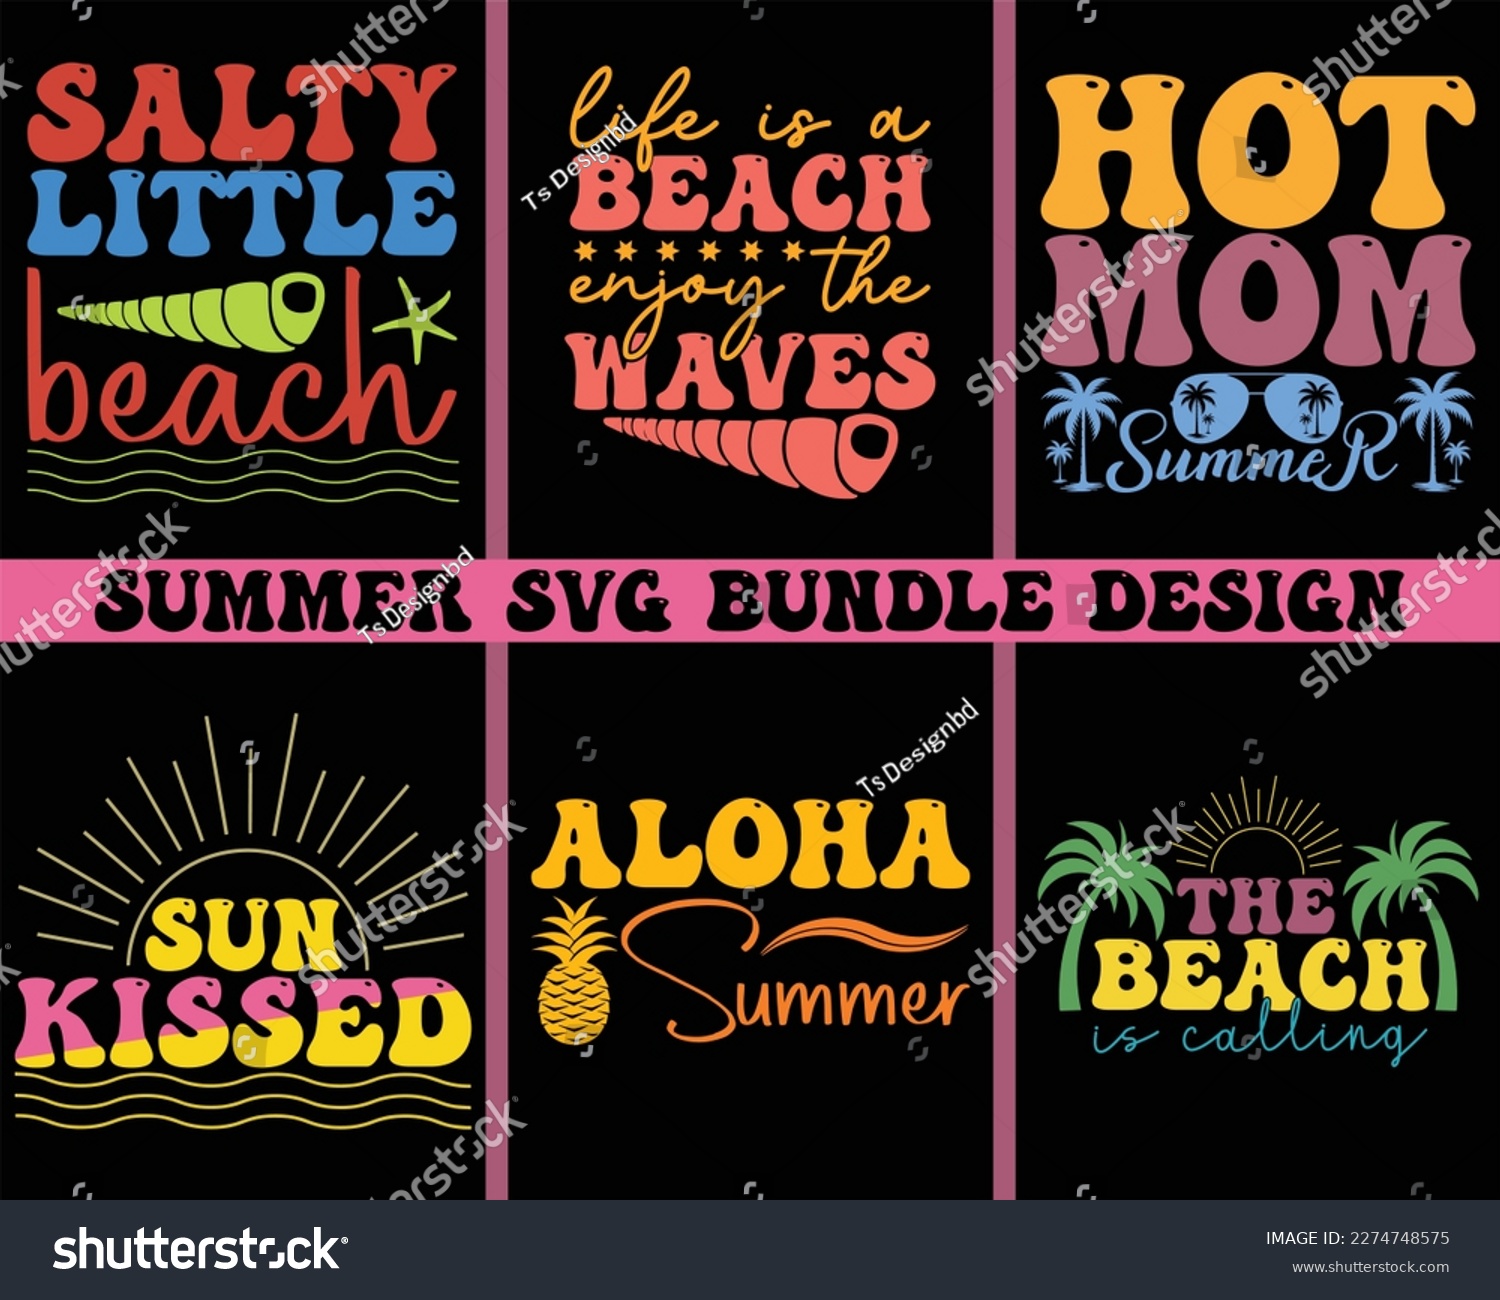 SVG of summer SVG design bundle,Summer Beach Bundle SVG,Summer Quotes SVG Designs Bundle,Summer Design for Shirts,Hello Summer quotes t shirt designs bundle, Quotes about Summer, beach cut files svg